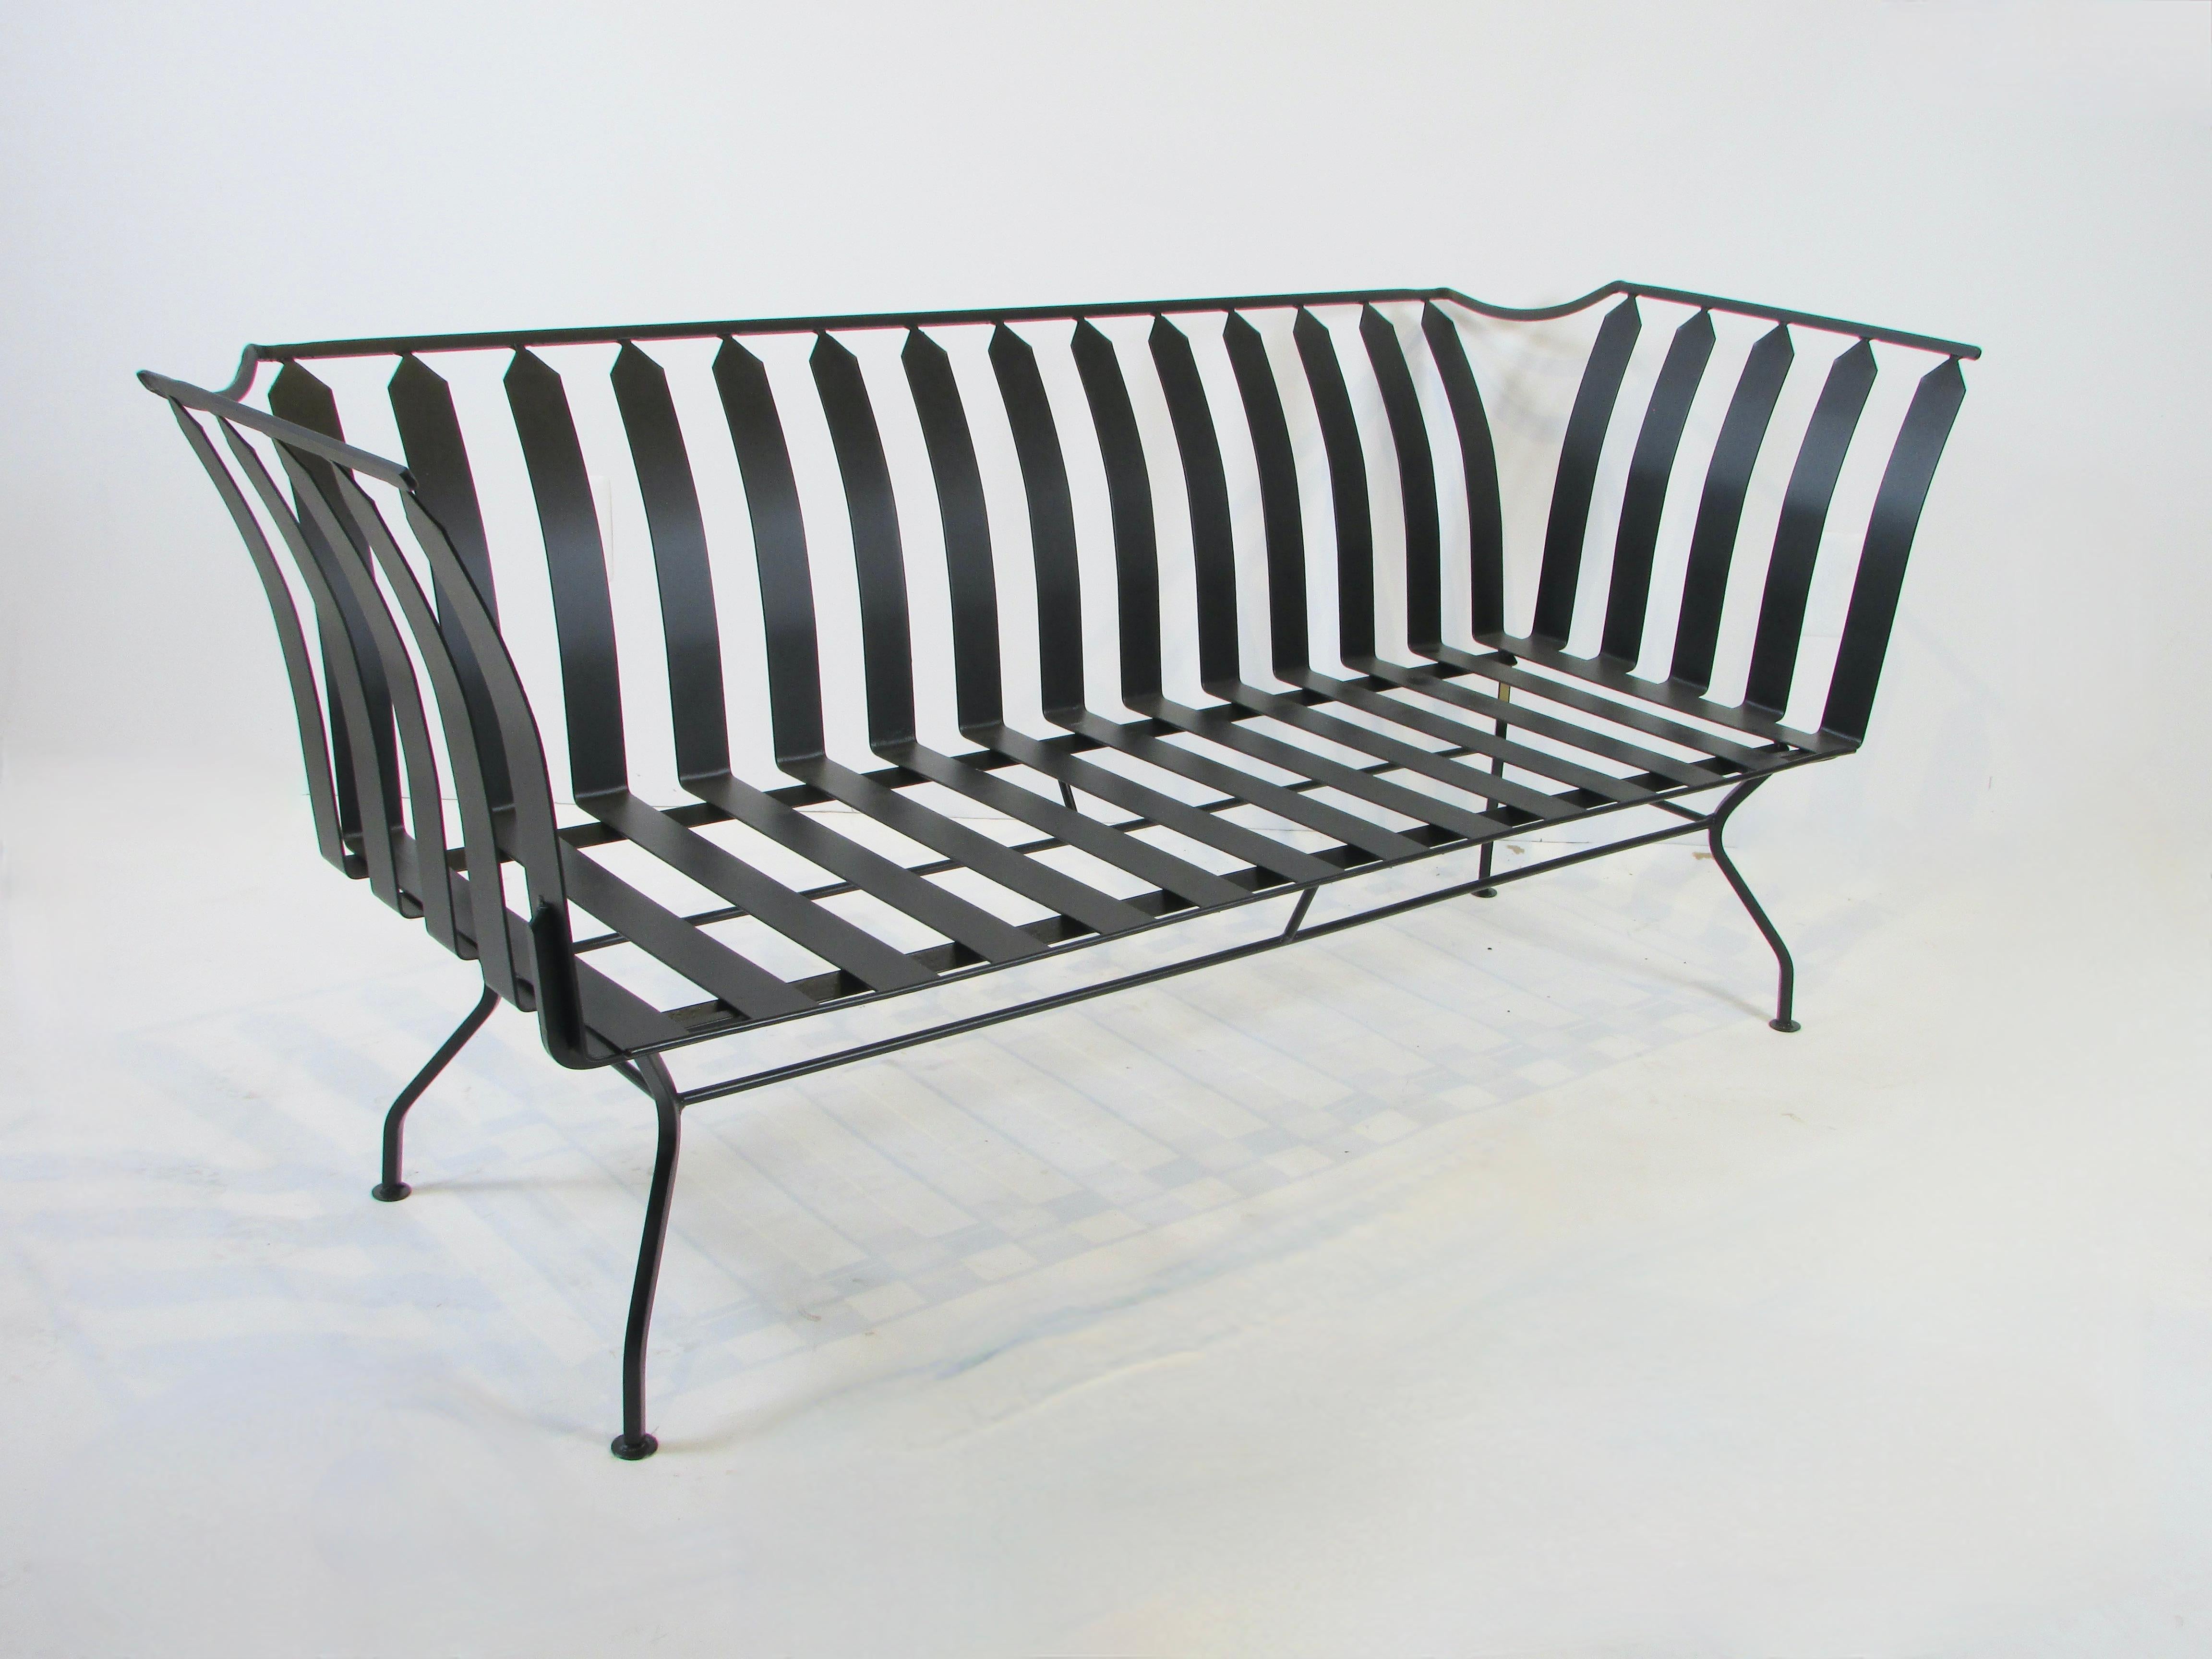 Steel Classic influenced Modernist Wrought Iron Garden Bench in Matte Black Finish